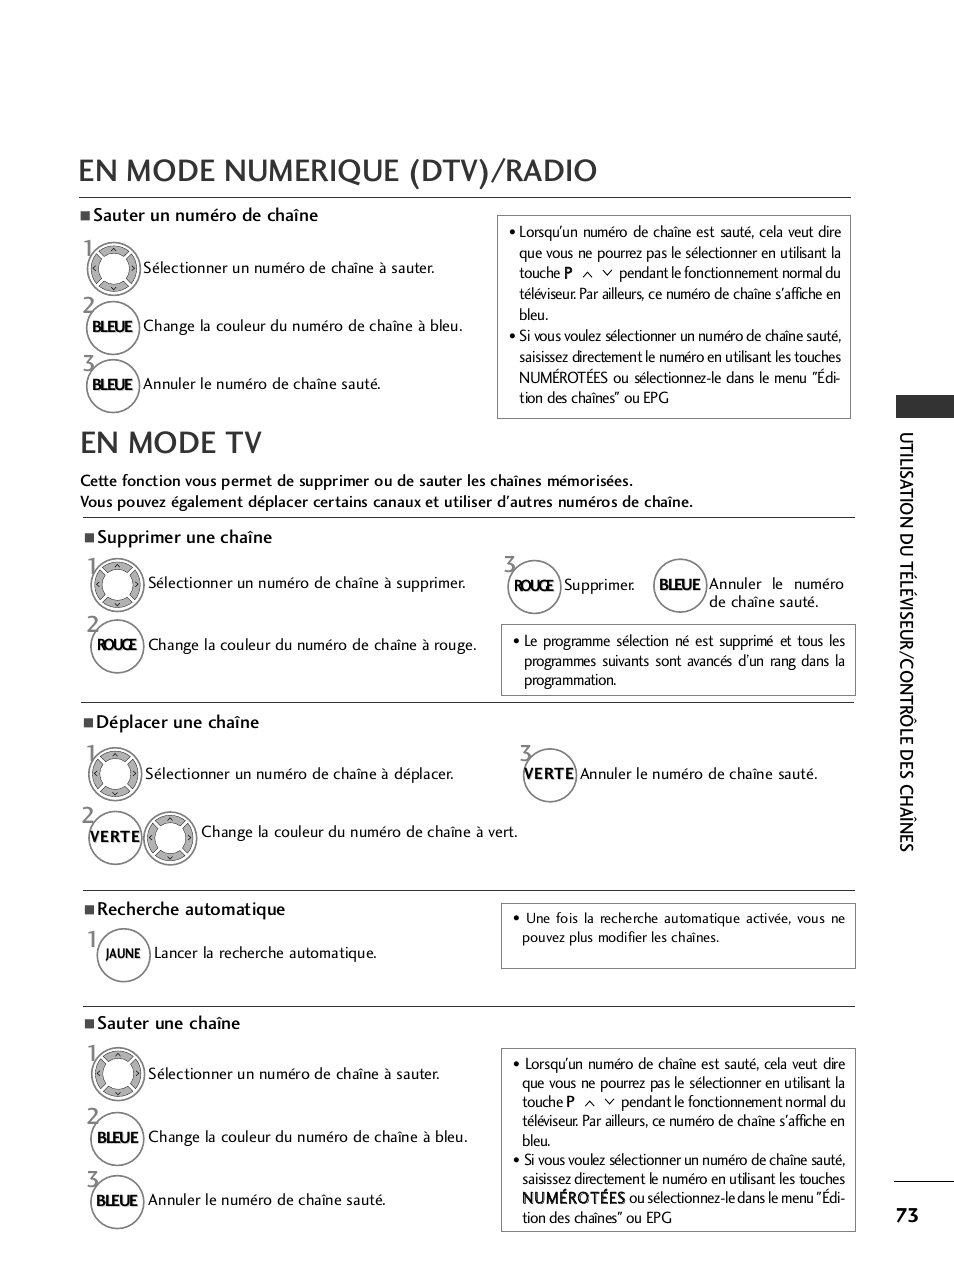 En mode tv, En mode numerique (dtv)/radio | LG 32LH40 Manuel d'utilisation | Page 75 / 180